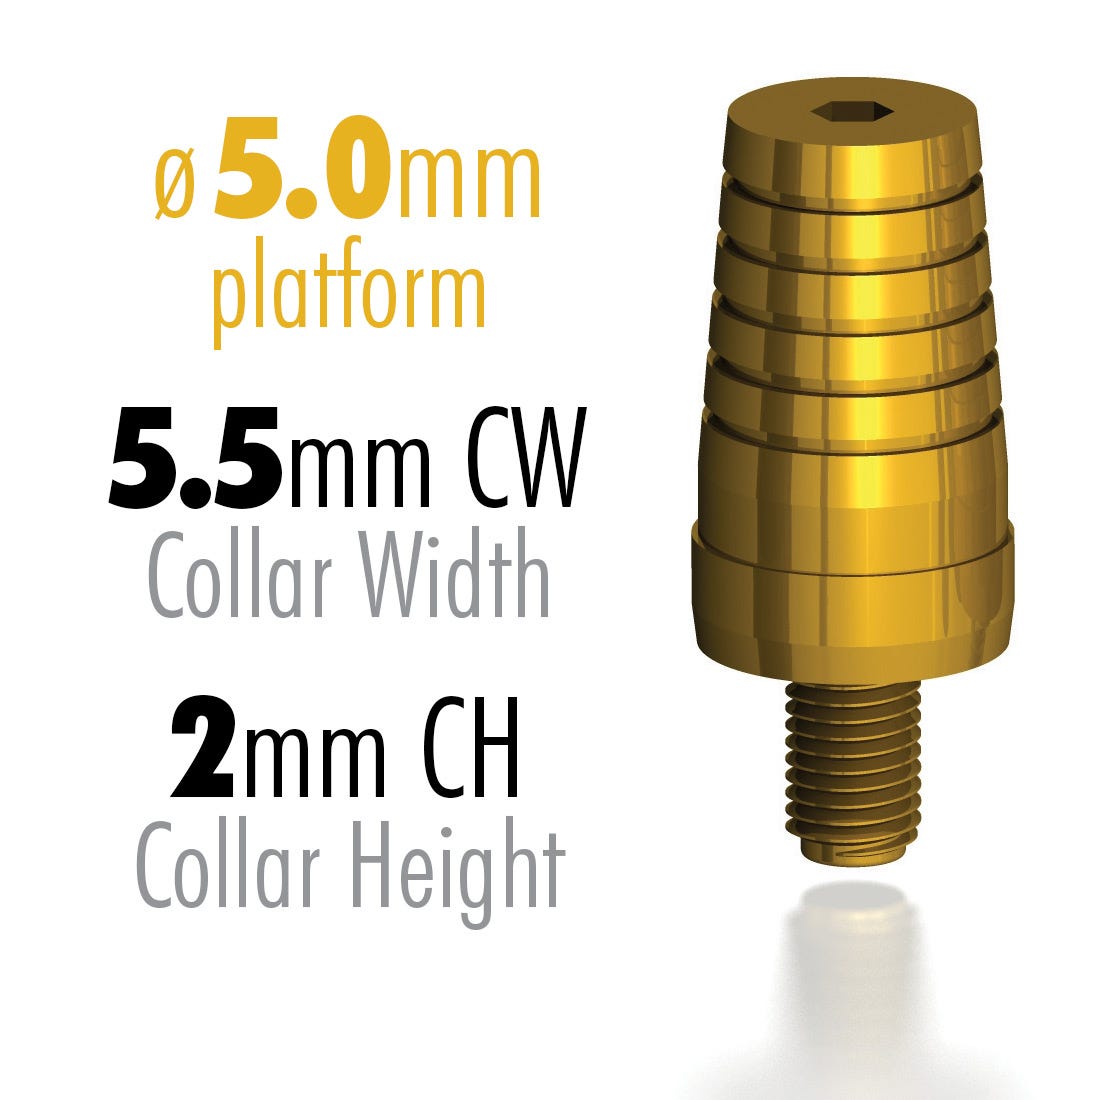 infinity X-hex Prepable Abutment, 5.0mm Platform, 5.5mm CW - 2mm CH - 1 Piece